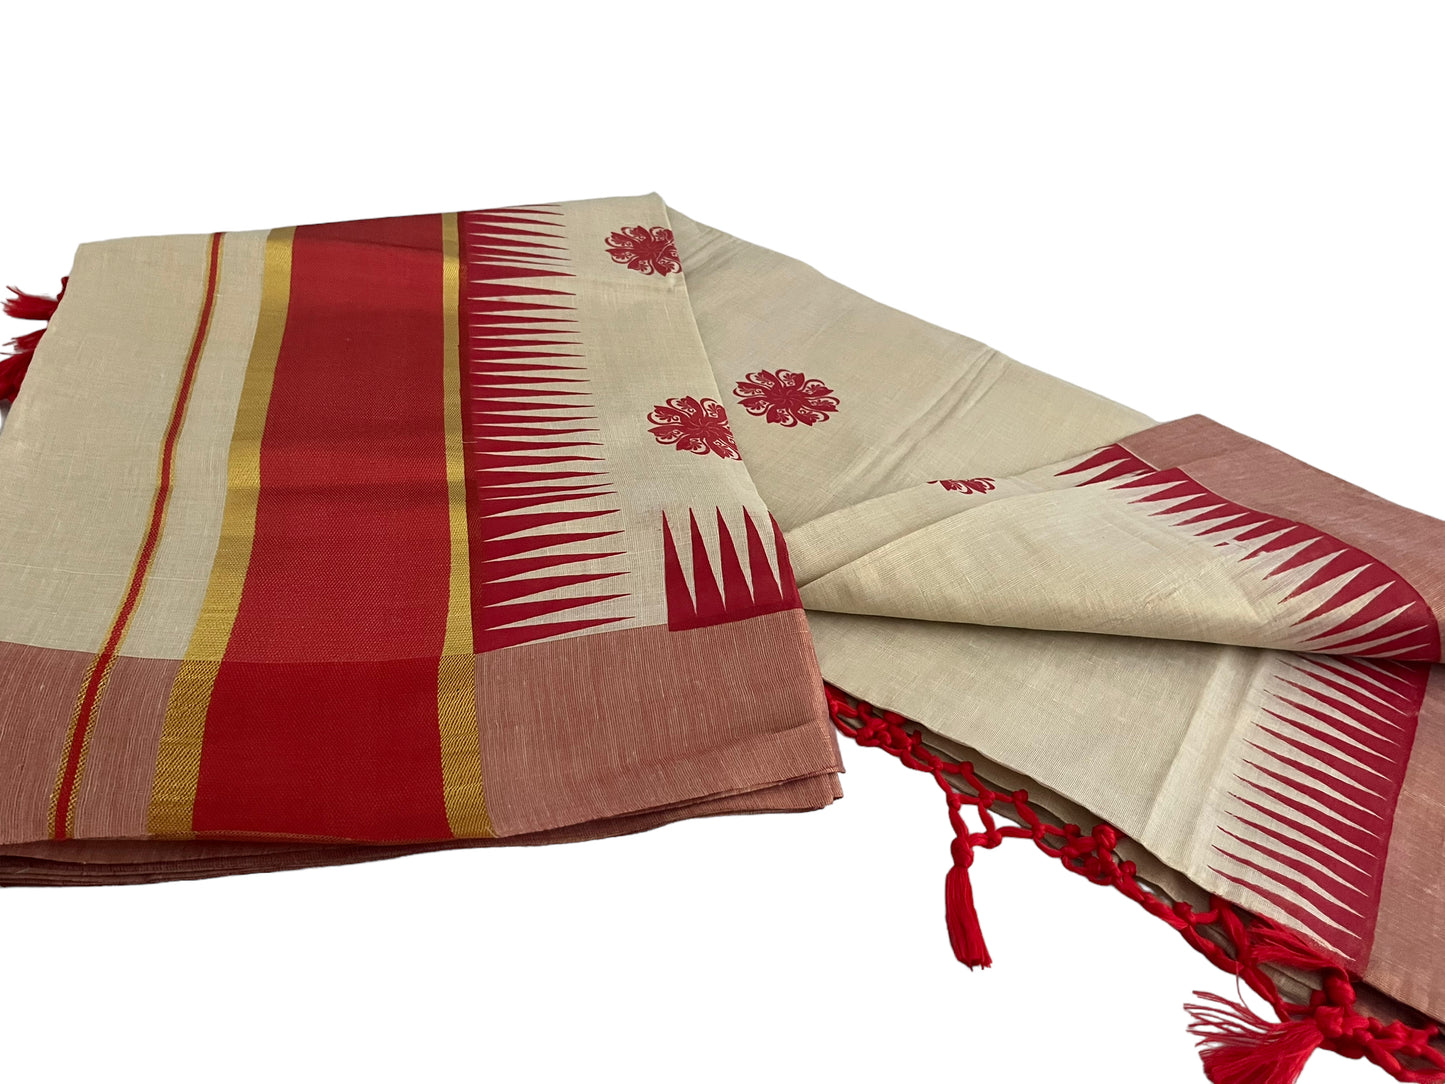 Kerala Saree brown prints in  red and gold kasavu sari| Petelz | Indian sari cotton tissue | red saree with tassels for navratri| Christmas